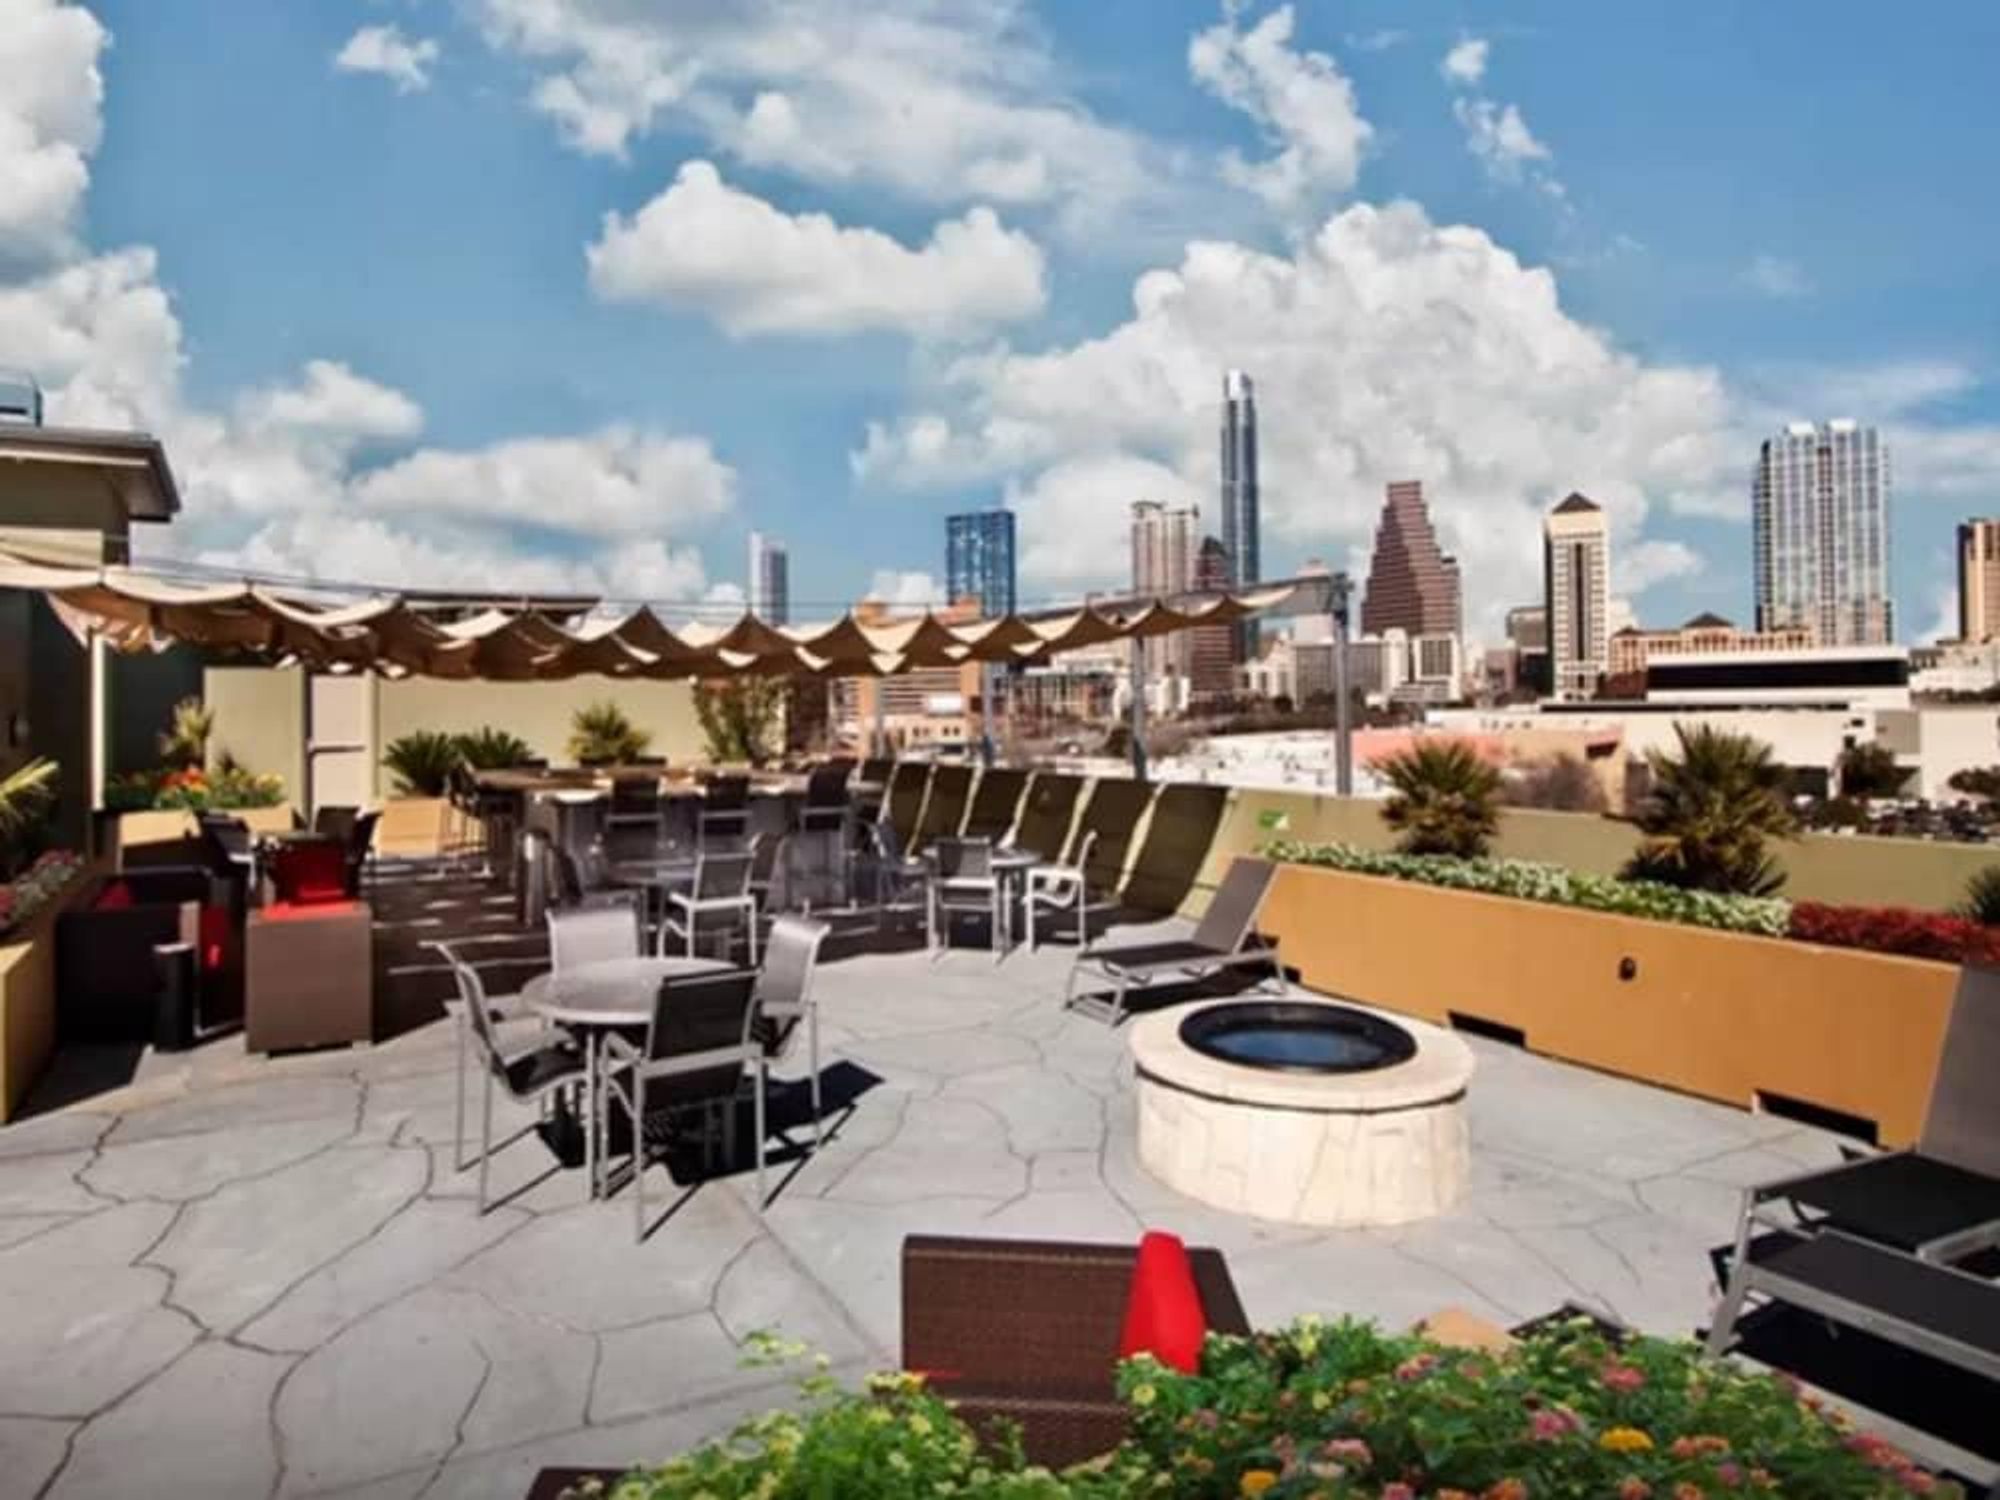 Airbnb Austin apartment downtown skyline view